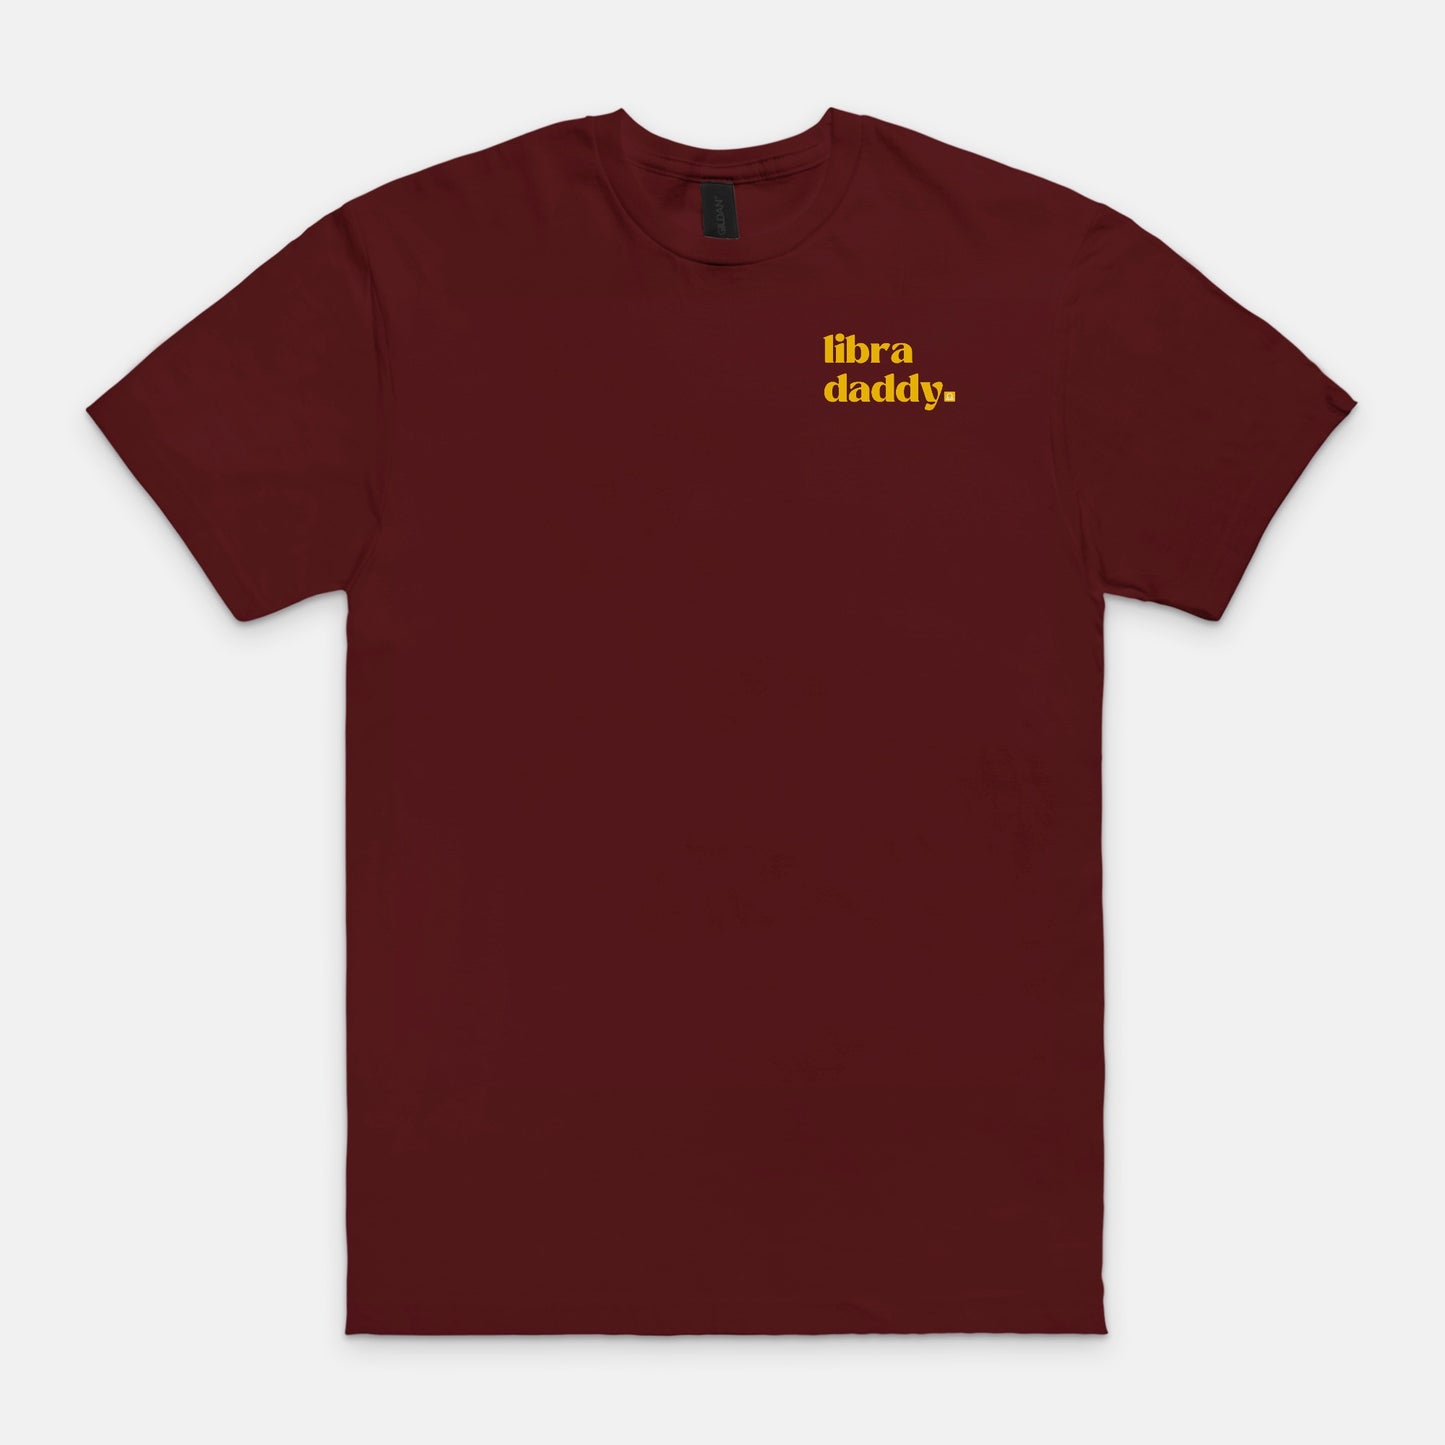 Libra Daddy T-shirt